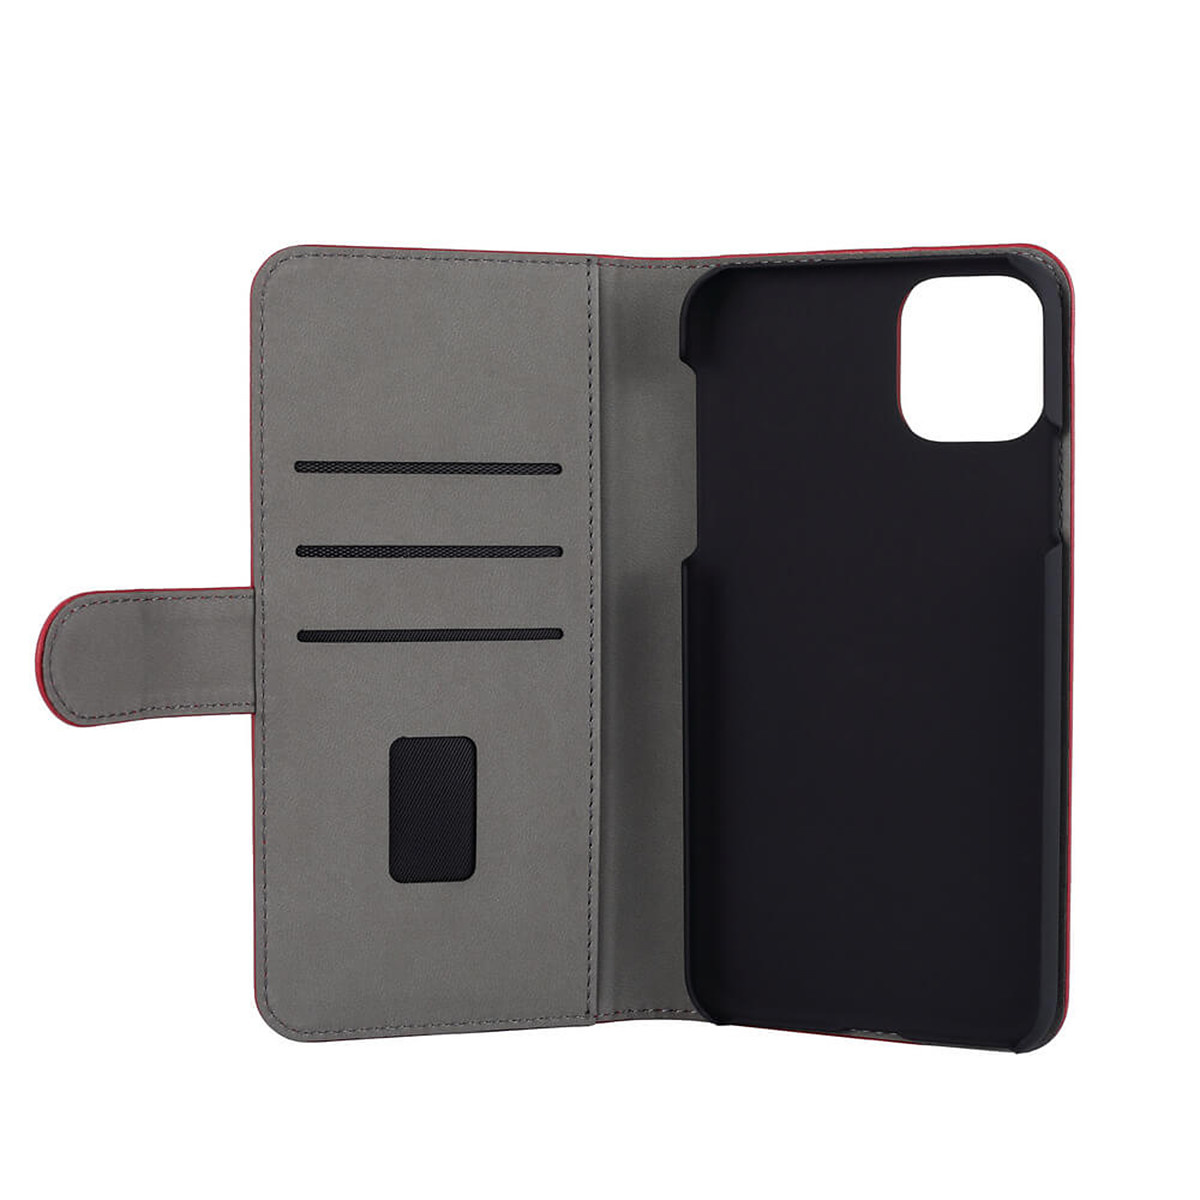 Gear Limited Edition plånboksfodral till iPhone 11 Pro Max, röd